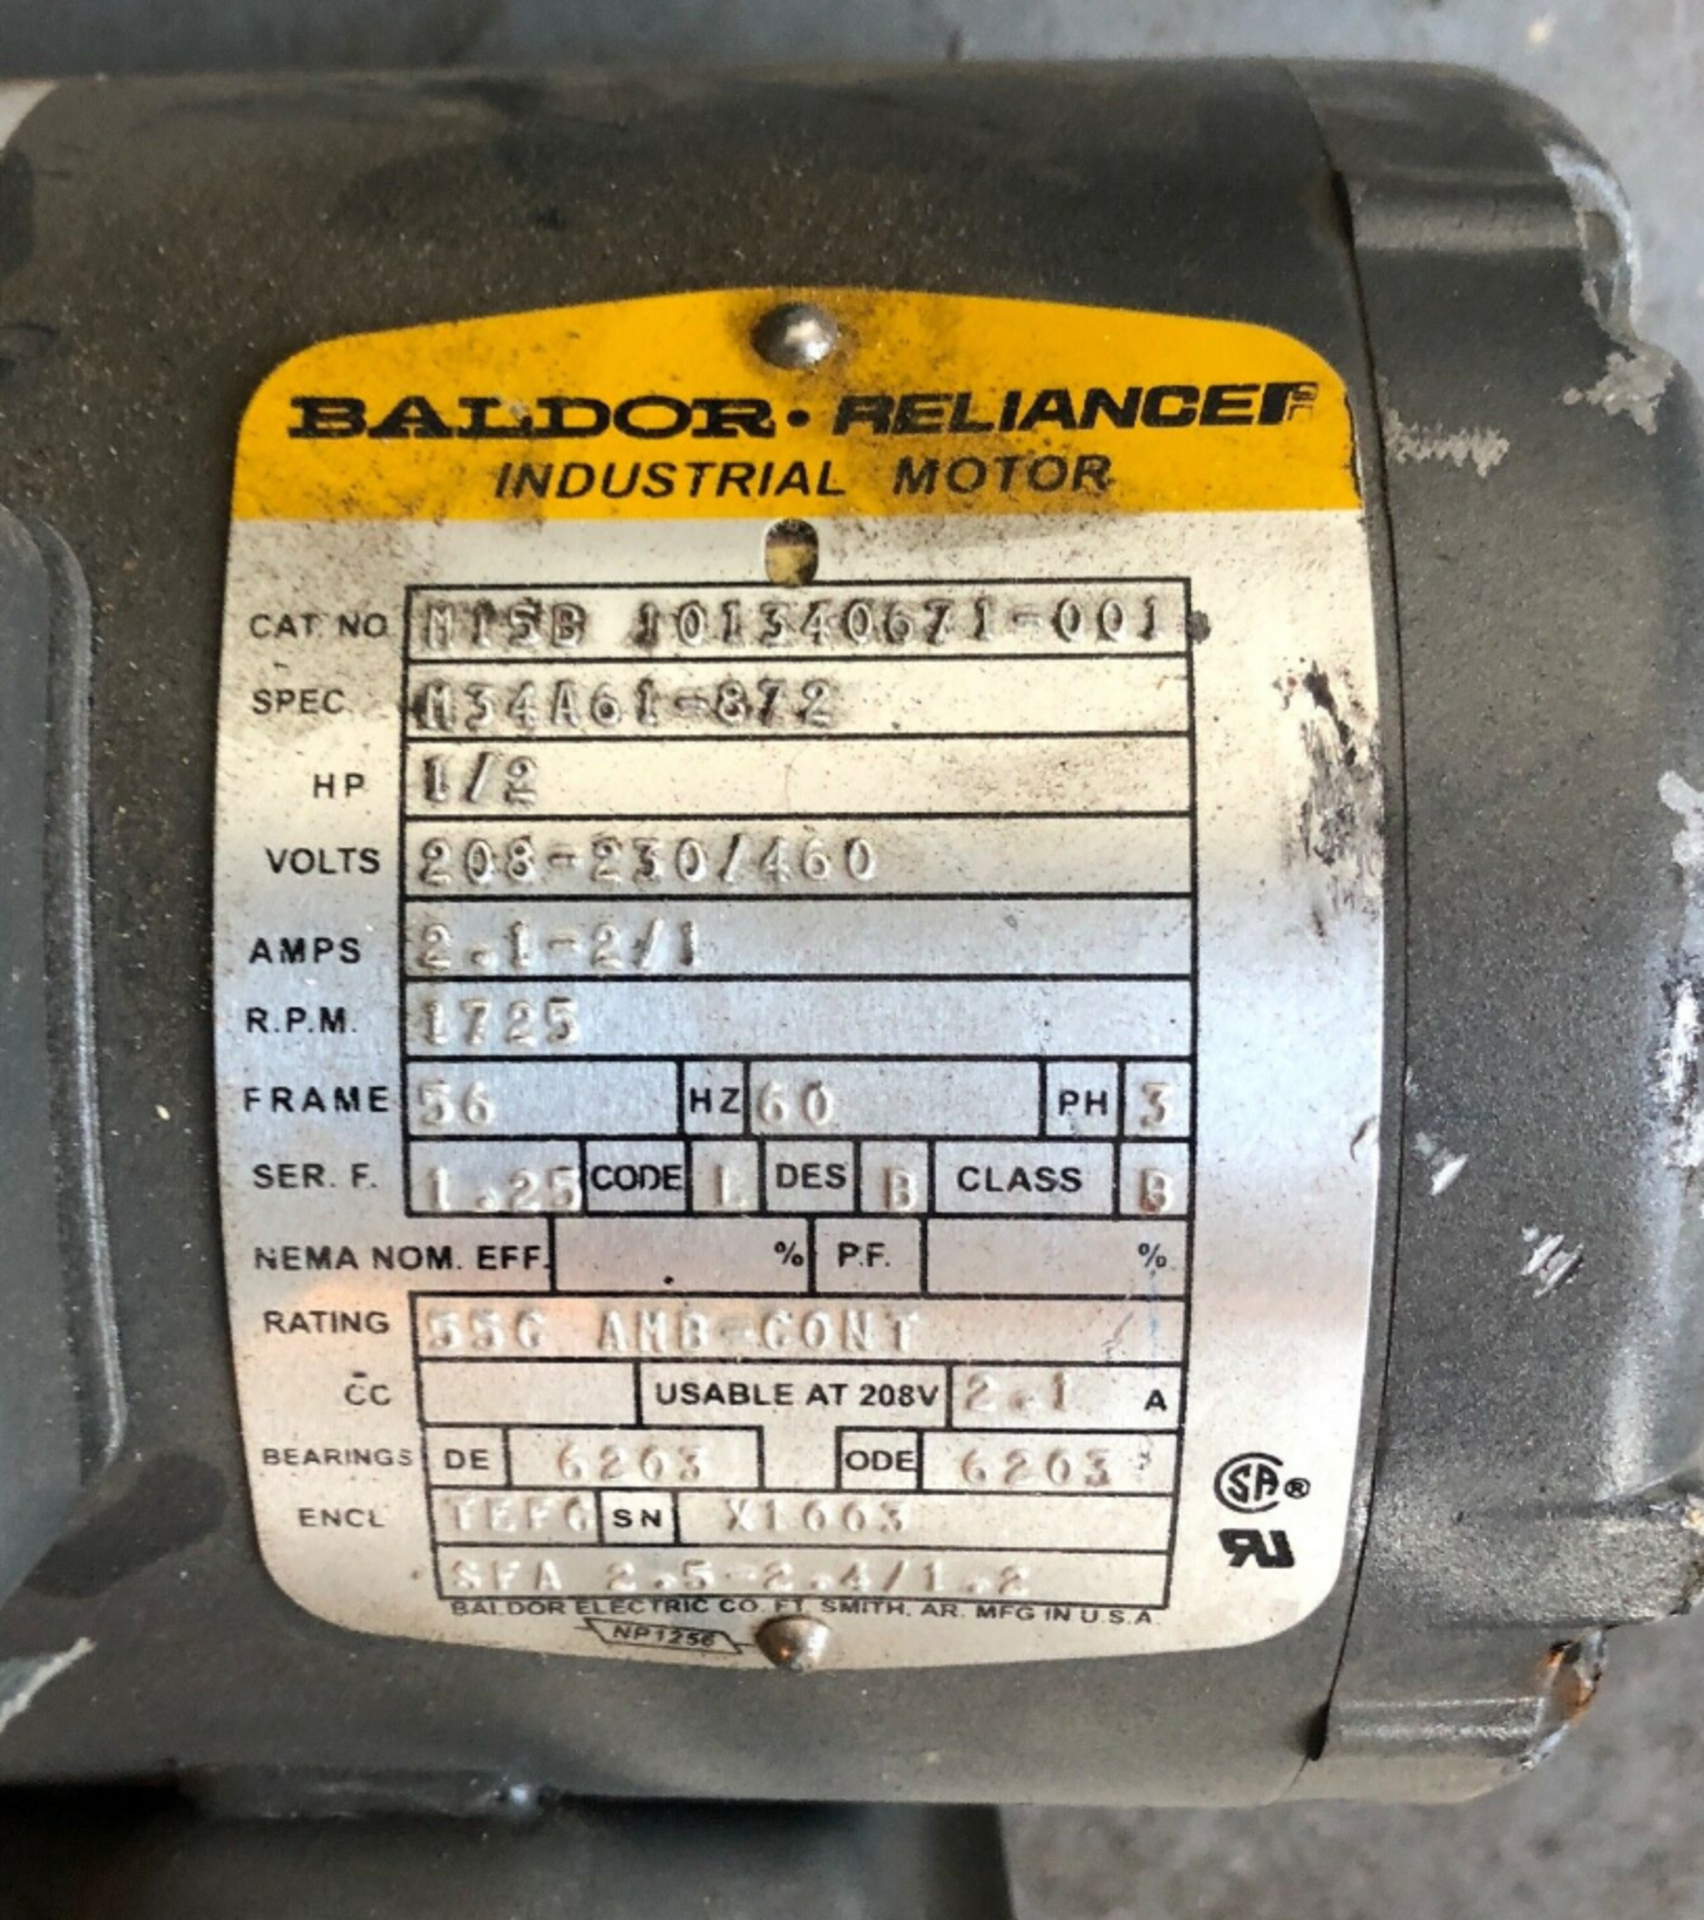 BALDOR INDUSTRIAL RELIANCE MOTOR 1725 RPM M15B 101340671-001 - Image 2 of 2